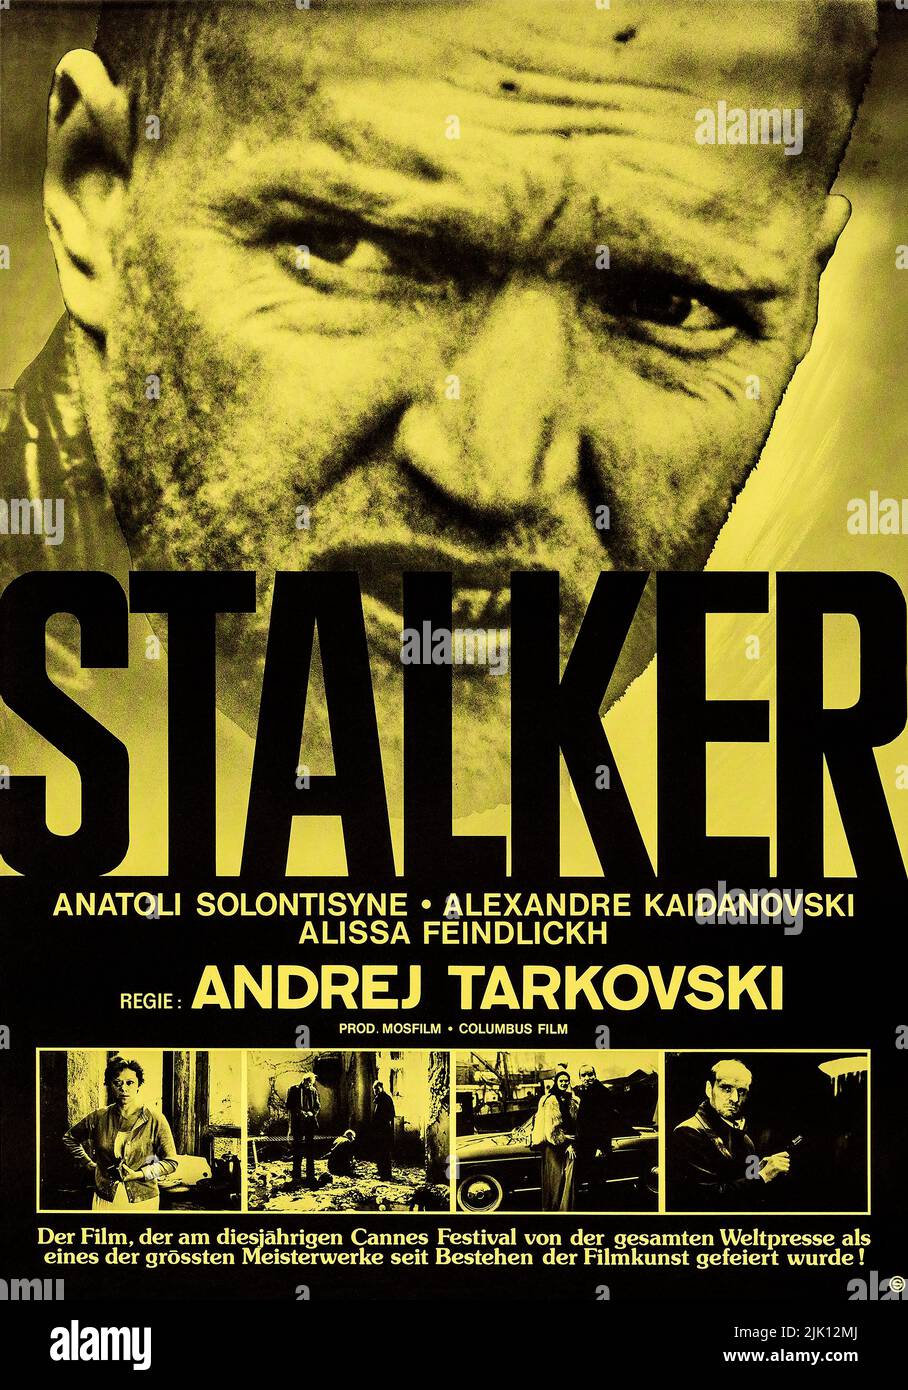 Stalker - Film Poster (Russian: Ста́лкер, 1979 Soviet science fiction art film directed by Andrei Tarkovsky written by Arkady and Boris Strugatsky Stock Photo